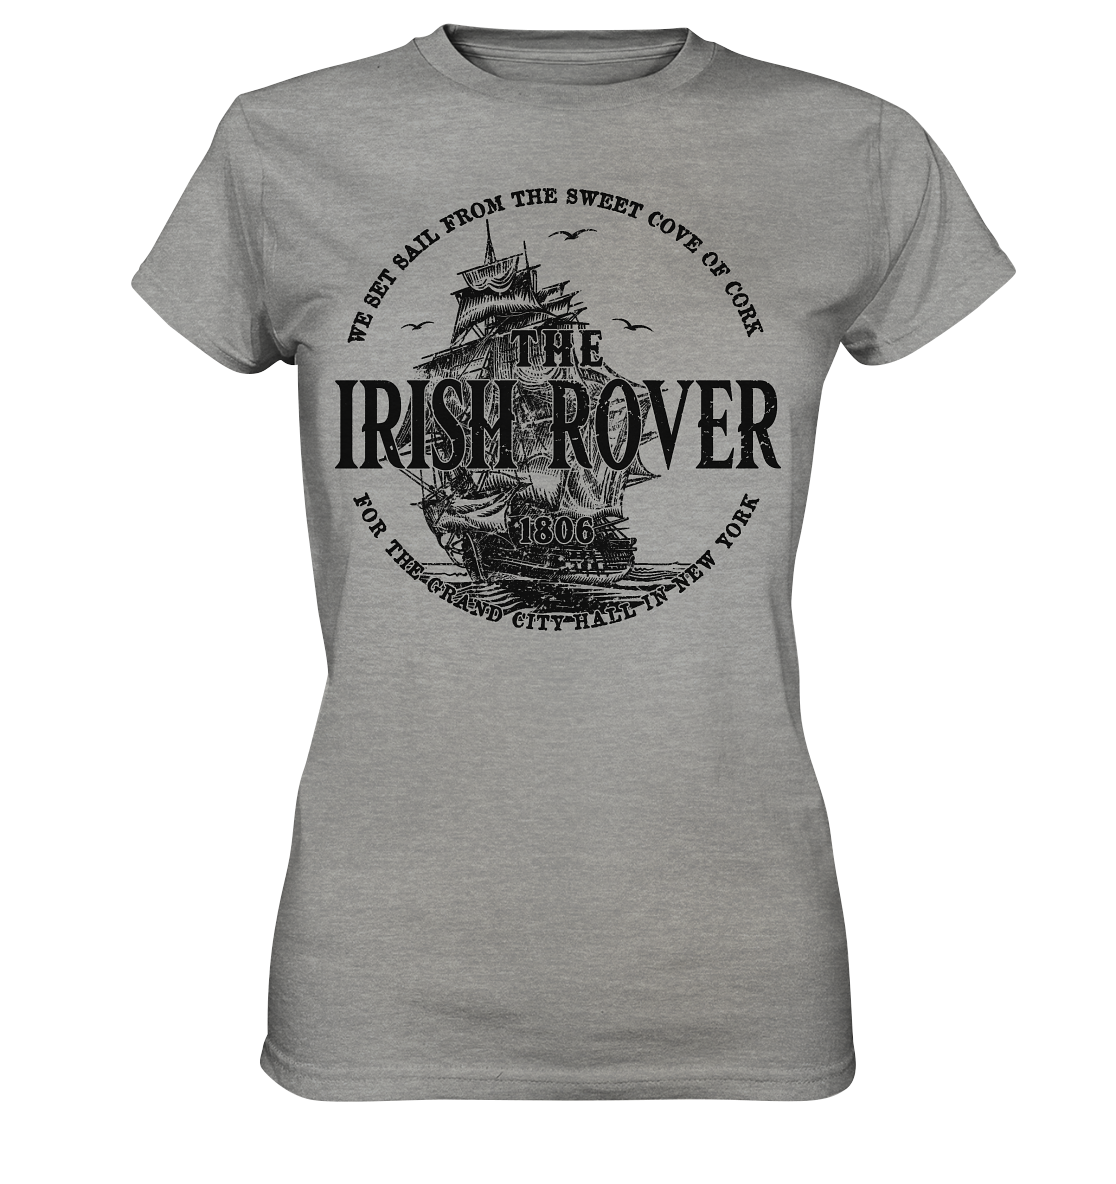 "The Irish Rover" - Ladies Premium Shirt